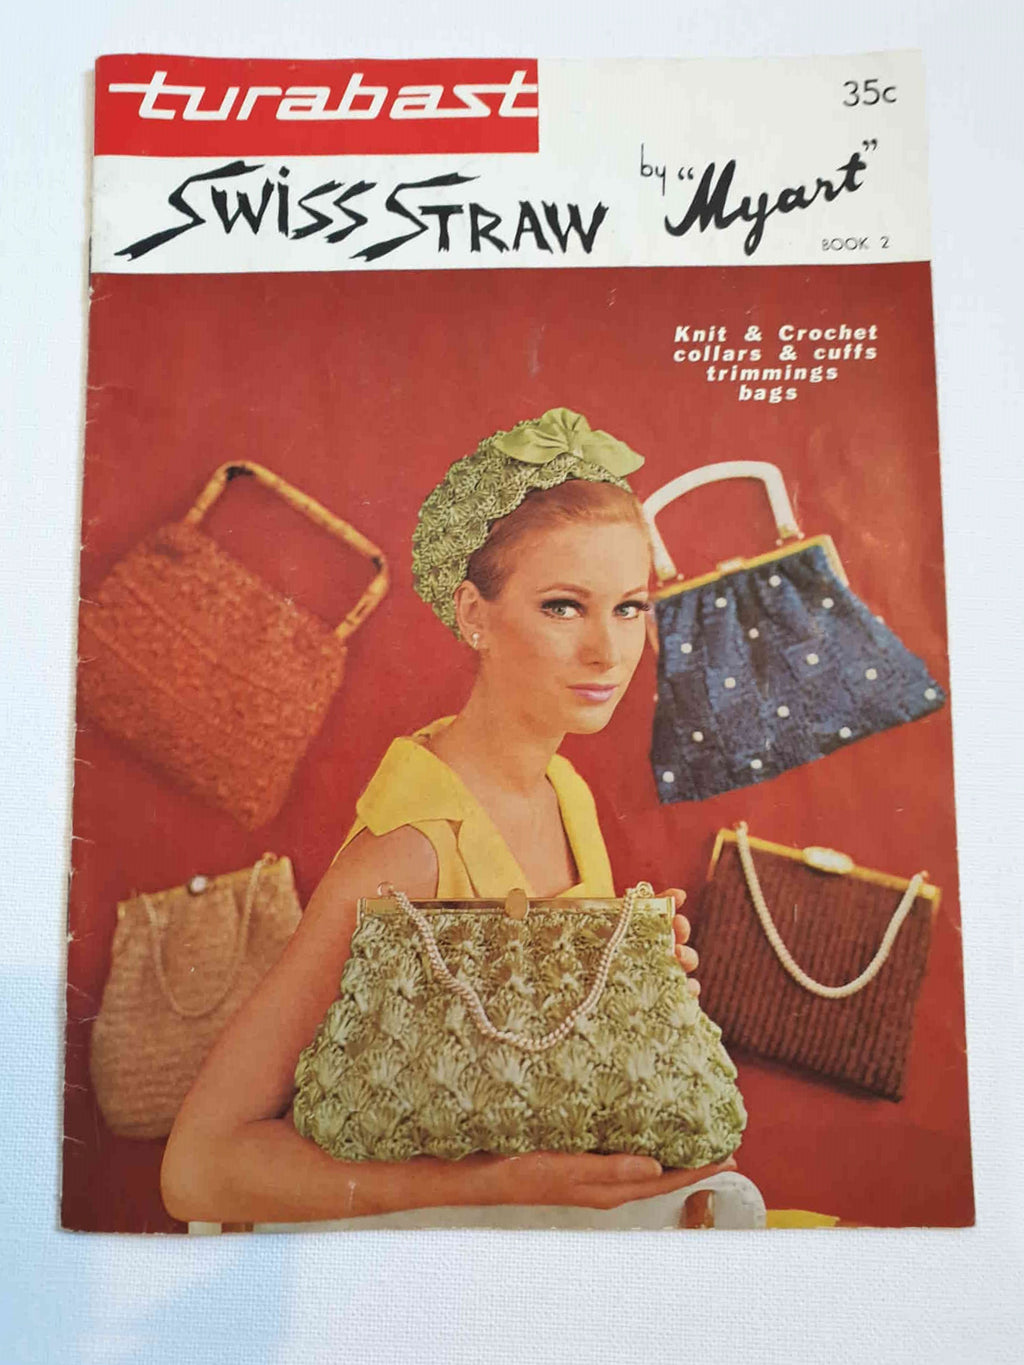 1960s vintage crochet book handbags swiss straw myart book 2